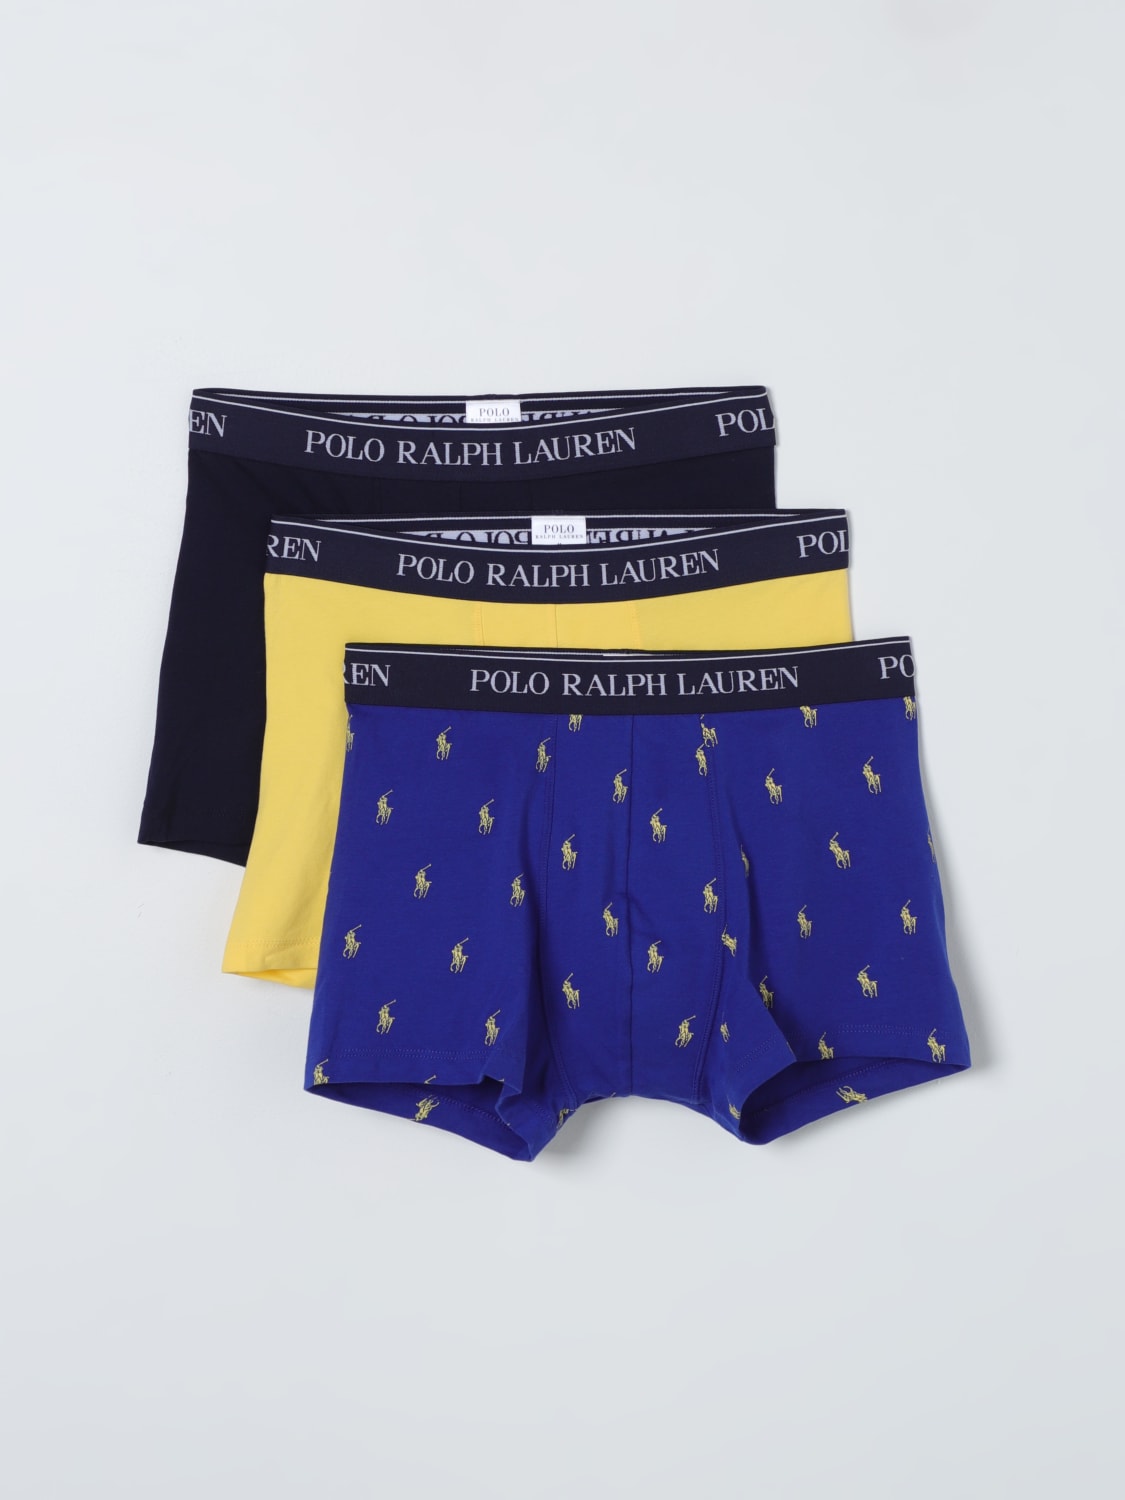 Men's Blue Polo Ralph Lauren Underwear